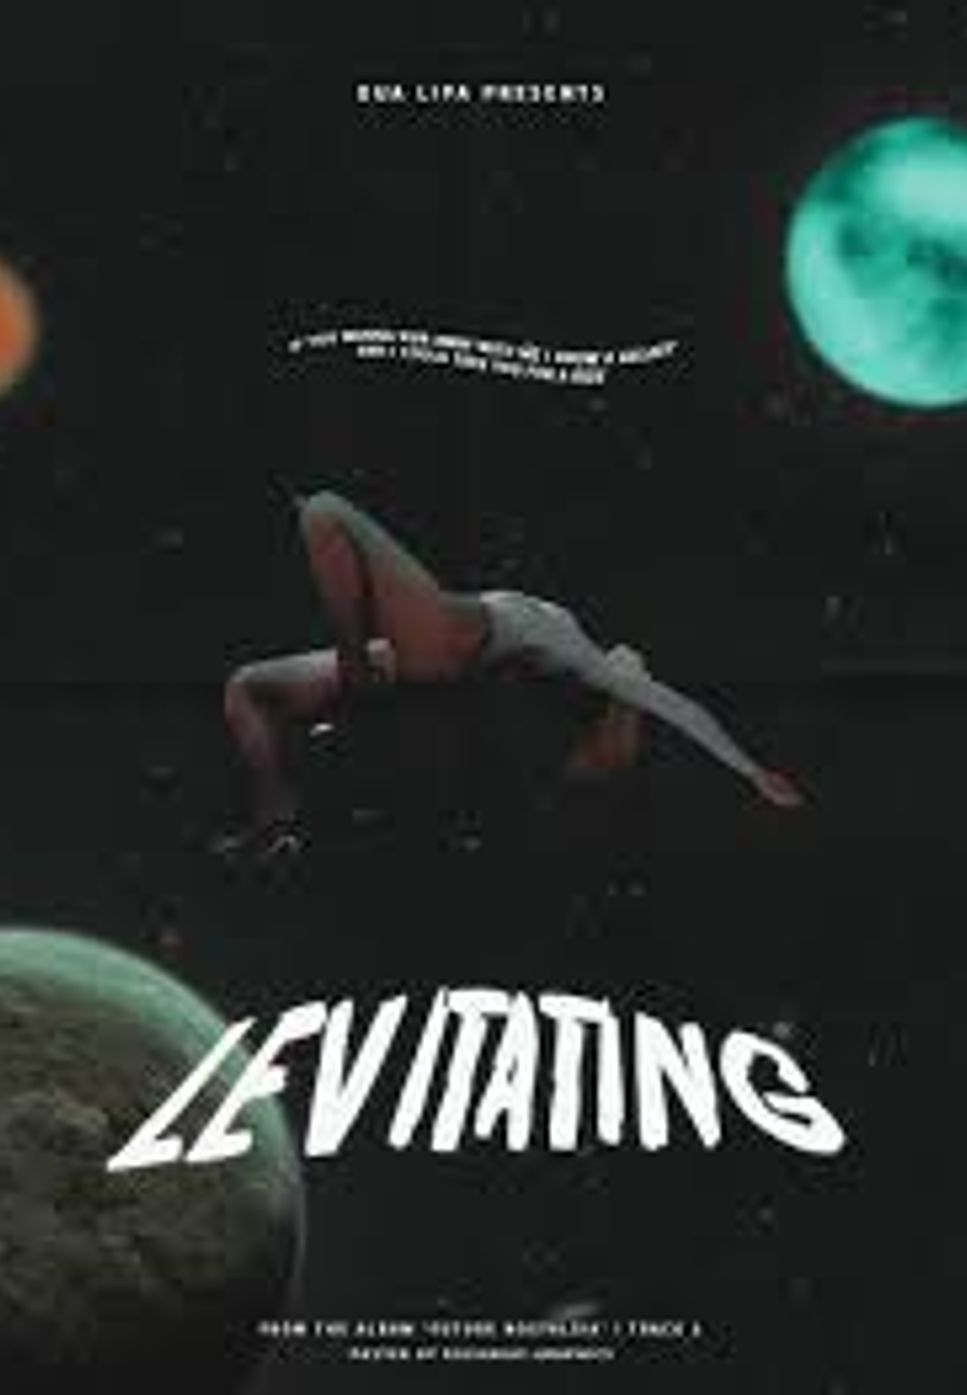 Dua Lipa - Levitating (Drums) by Aketza Antonio